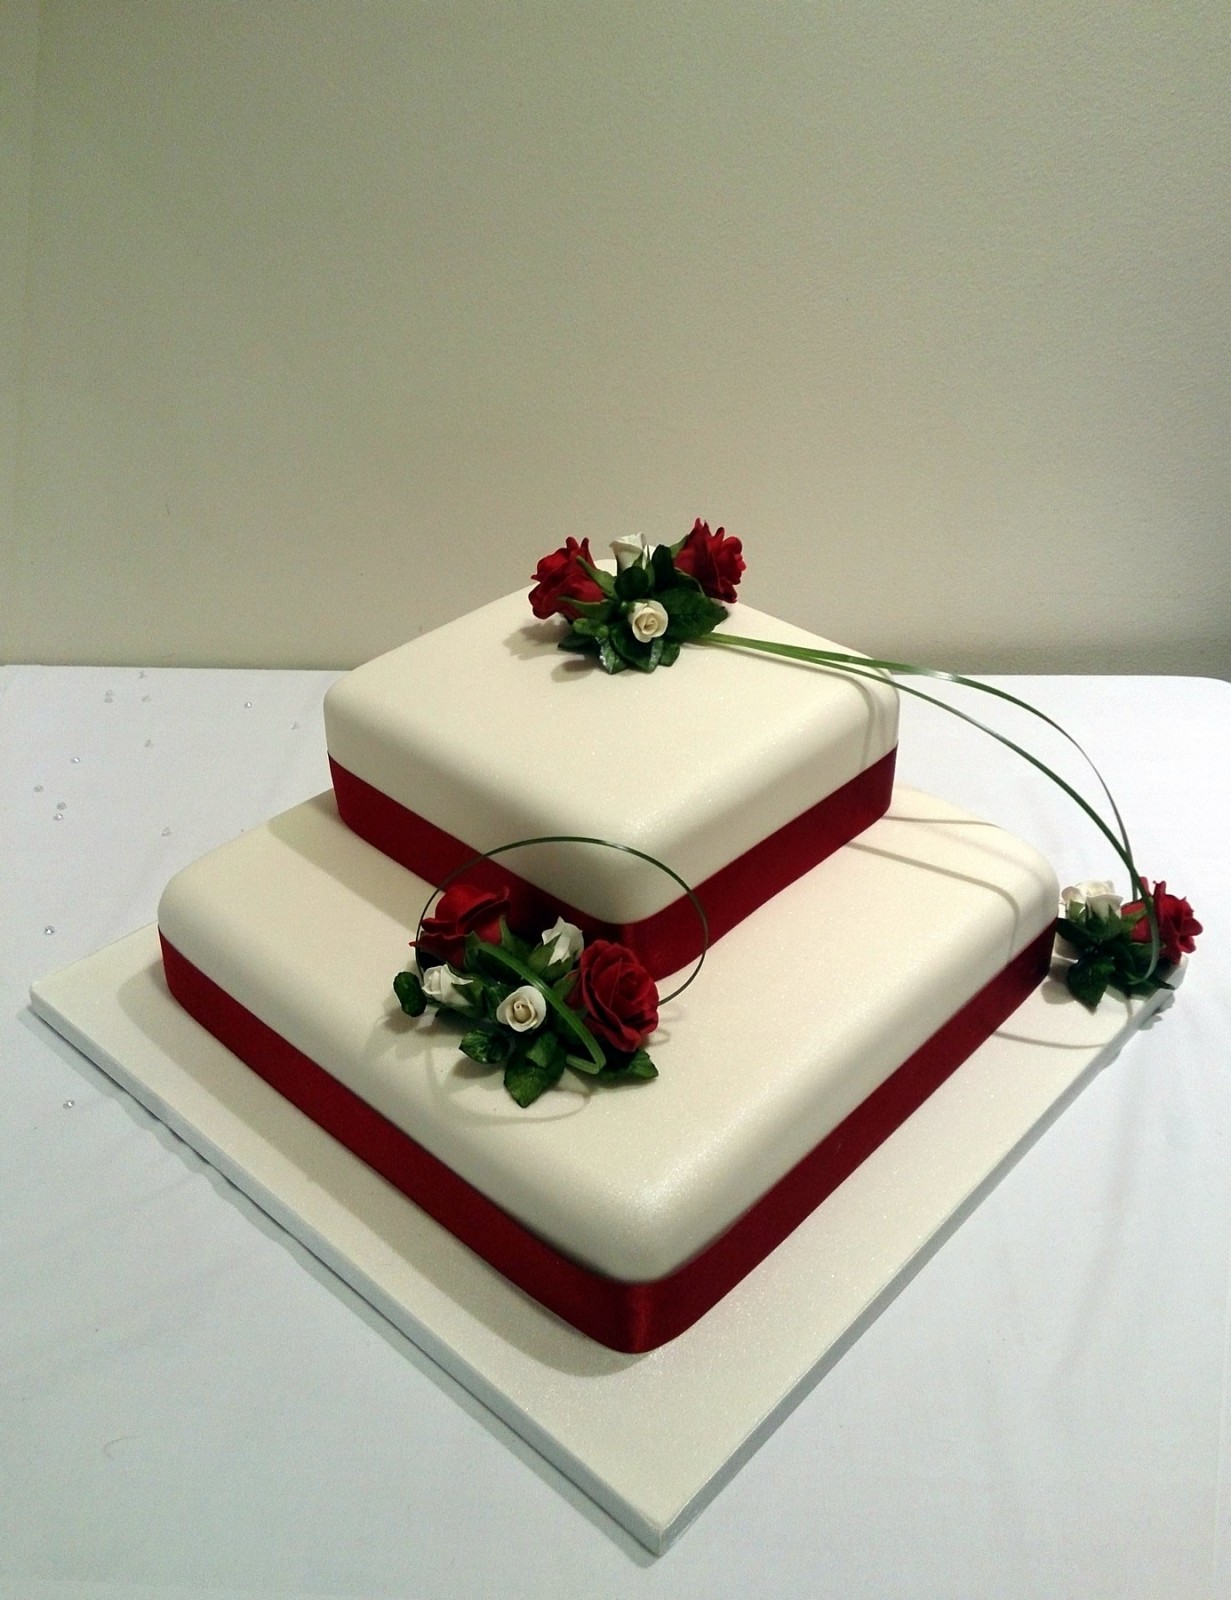 11 2 Layer Square Wedding Cakes Photo 2 Tier Square Wedding Cake